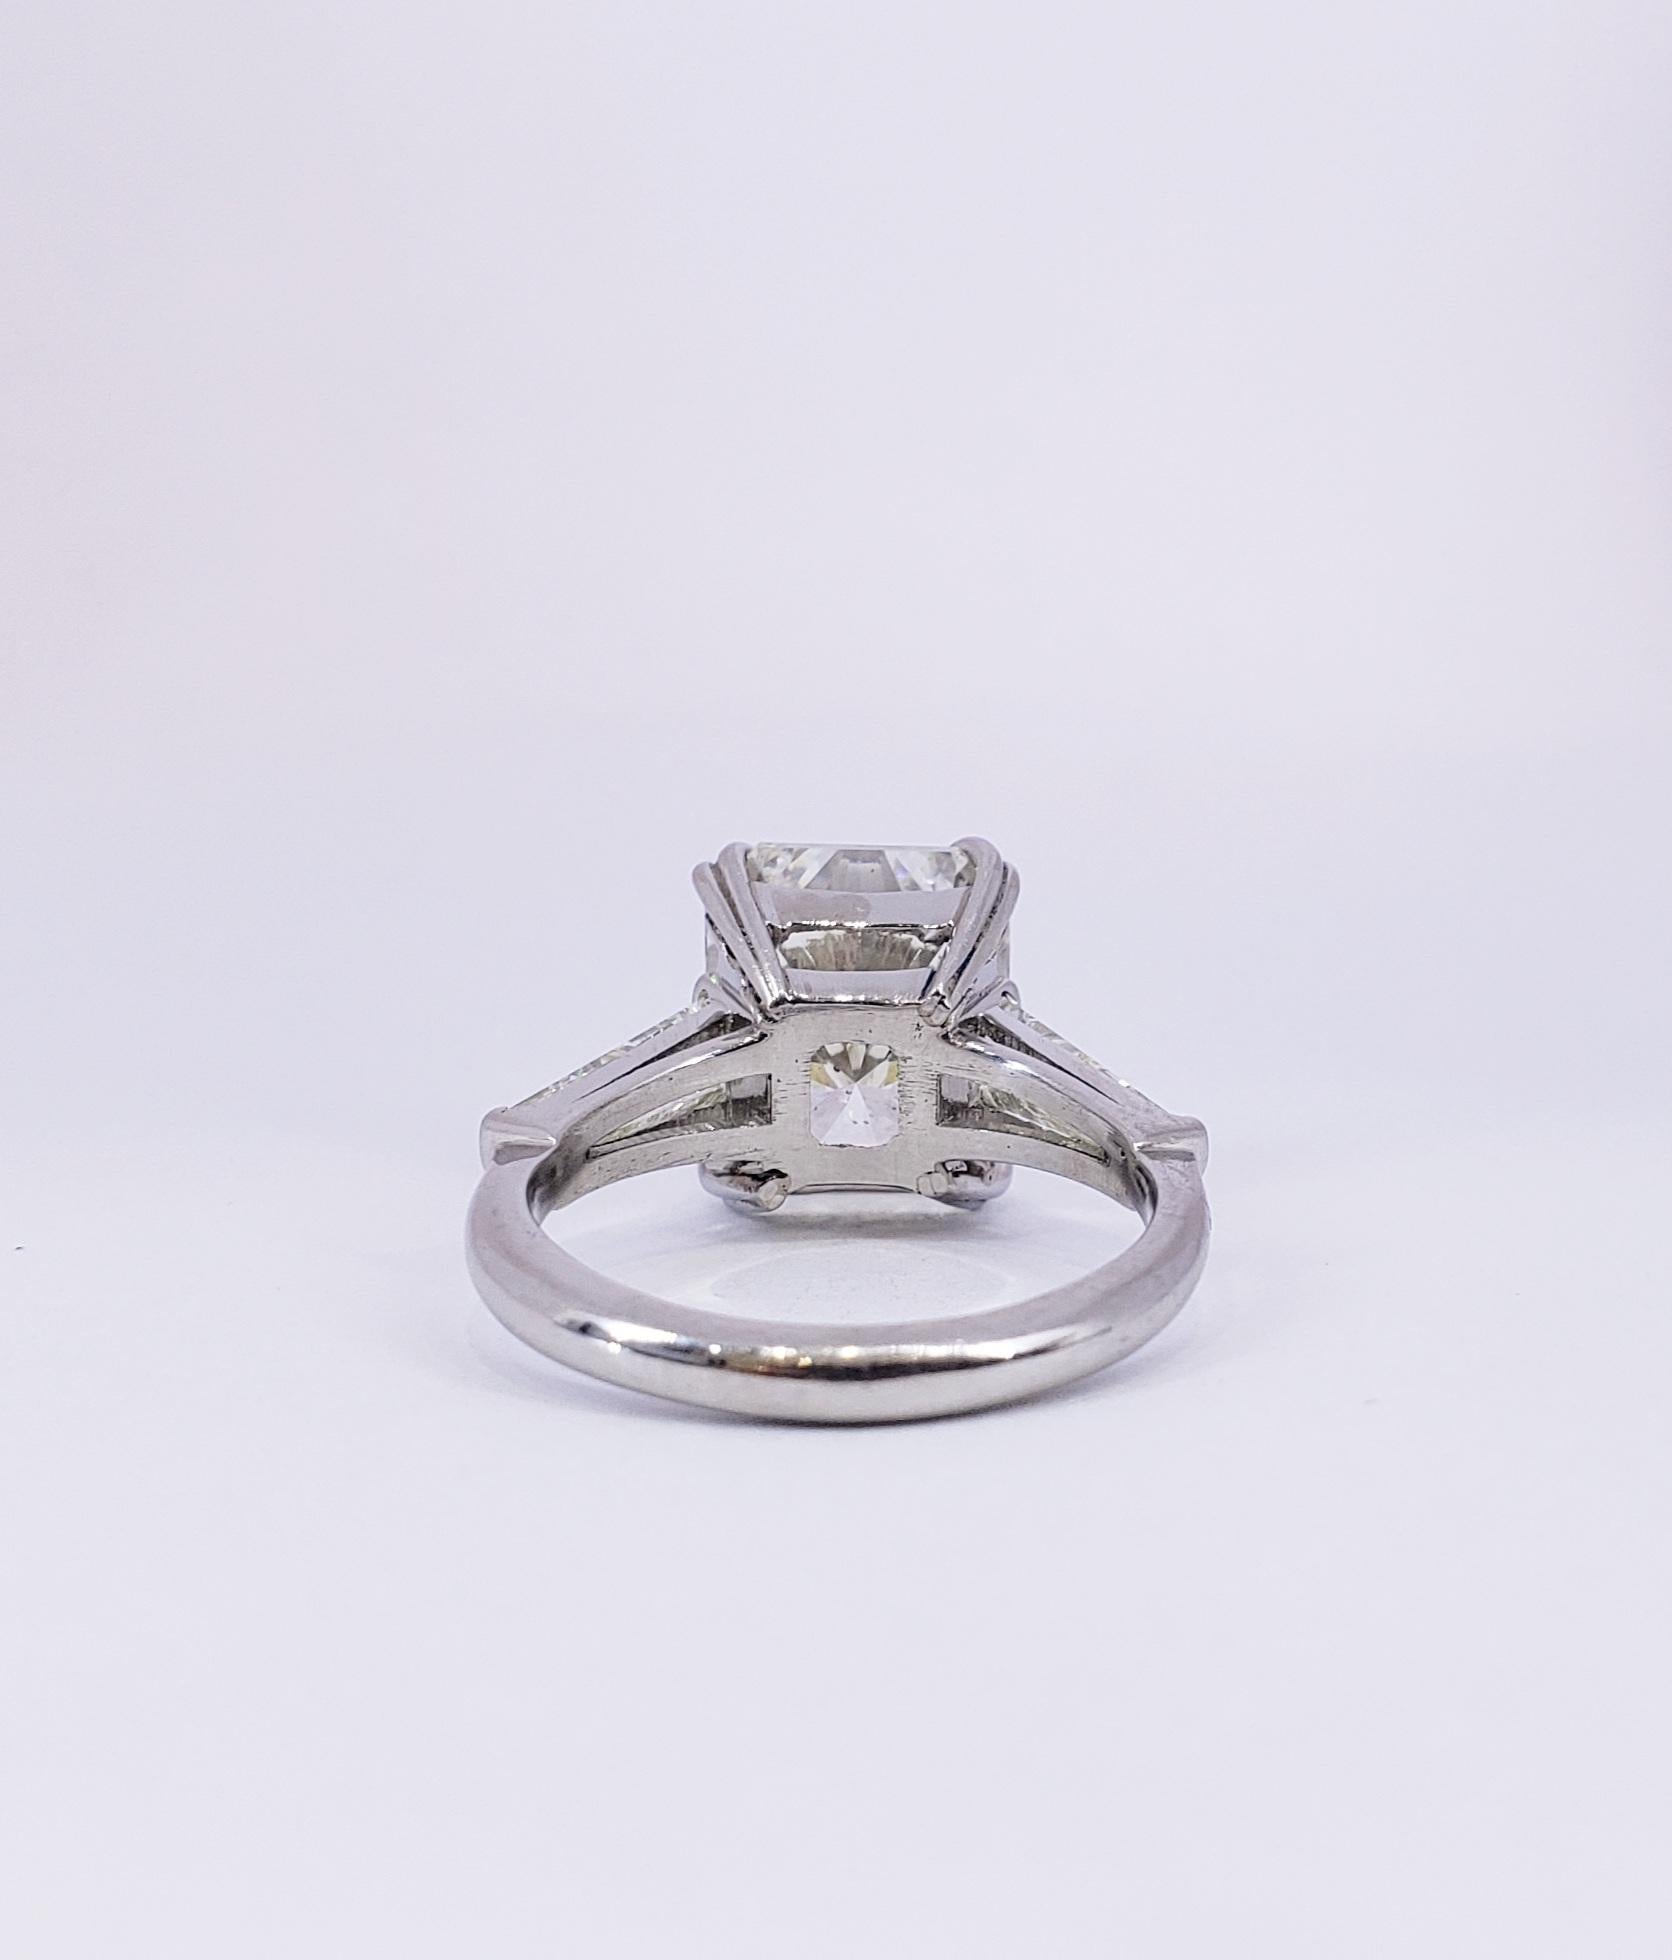 6 ct radiant cut diamond ring